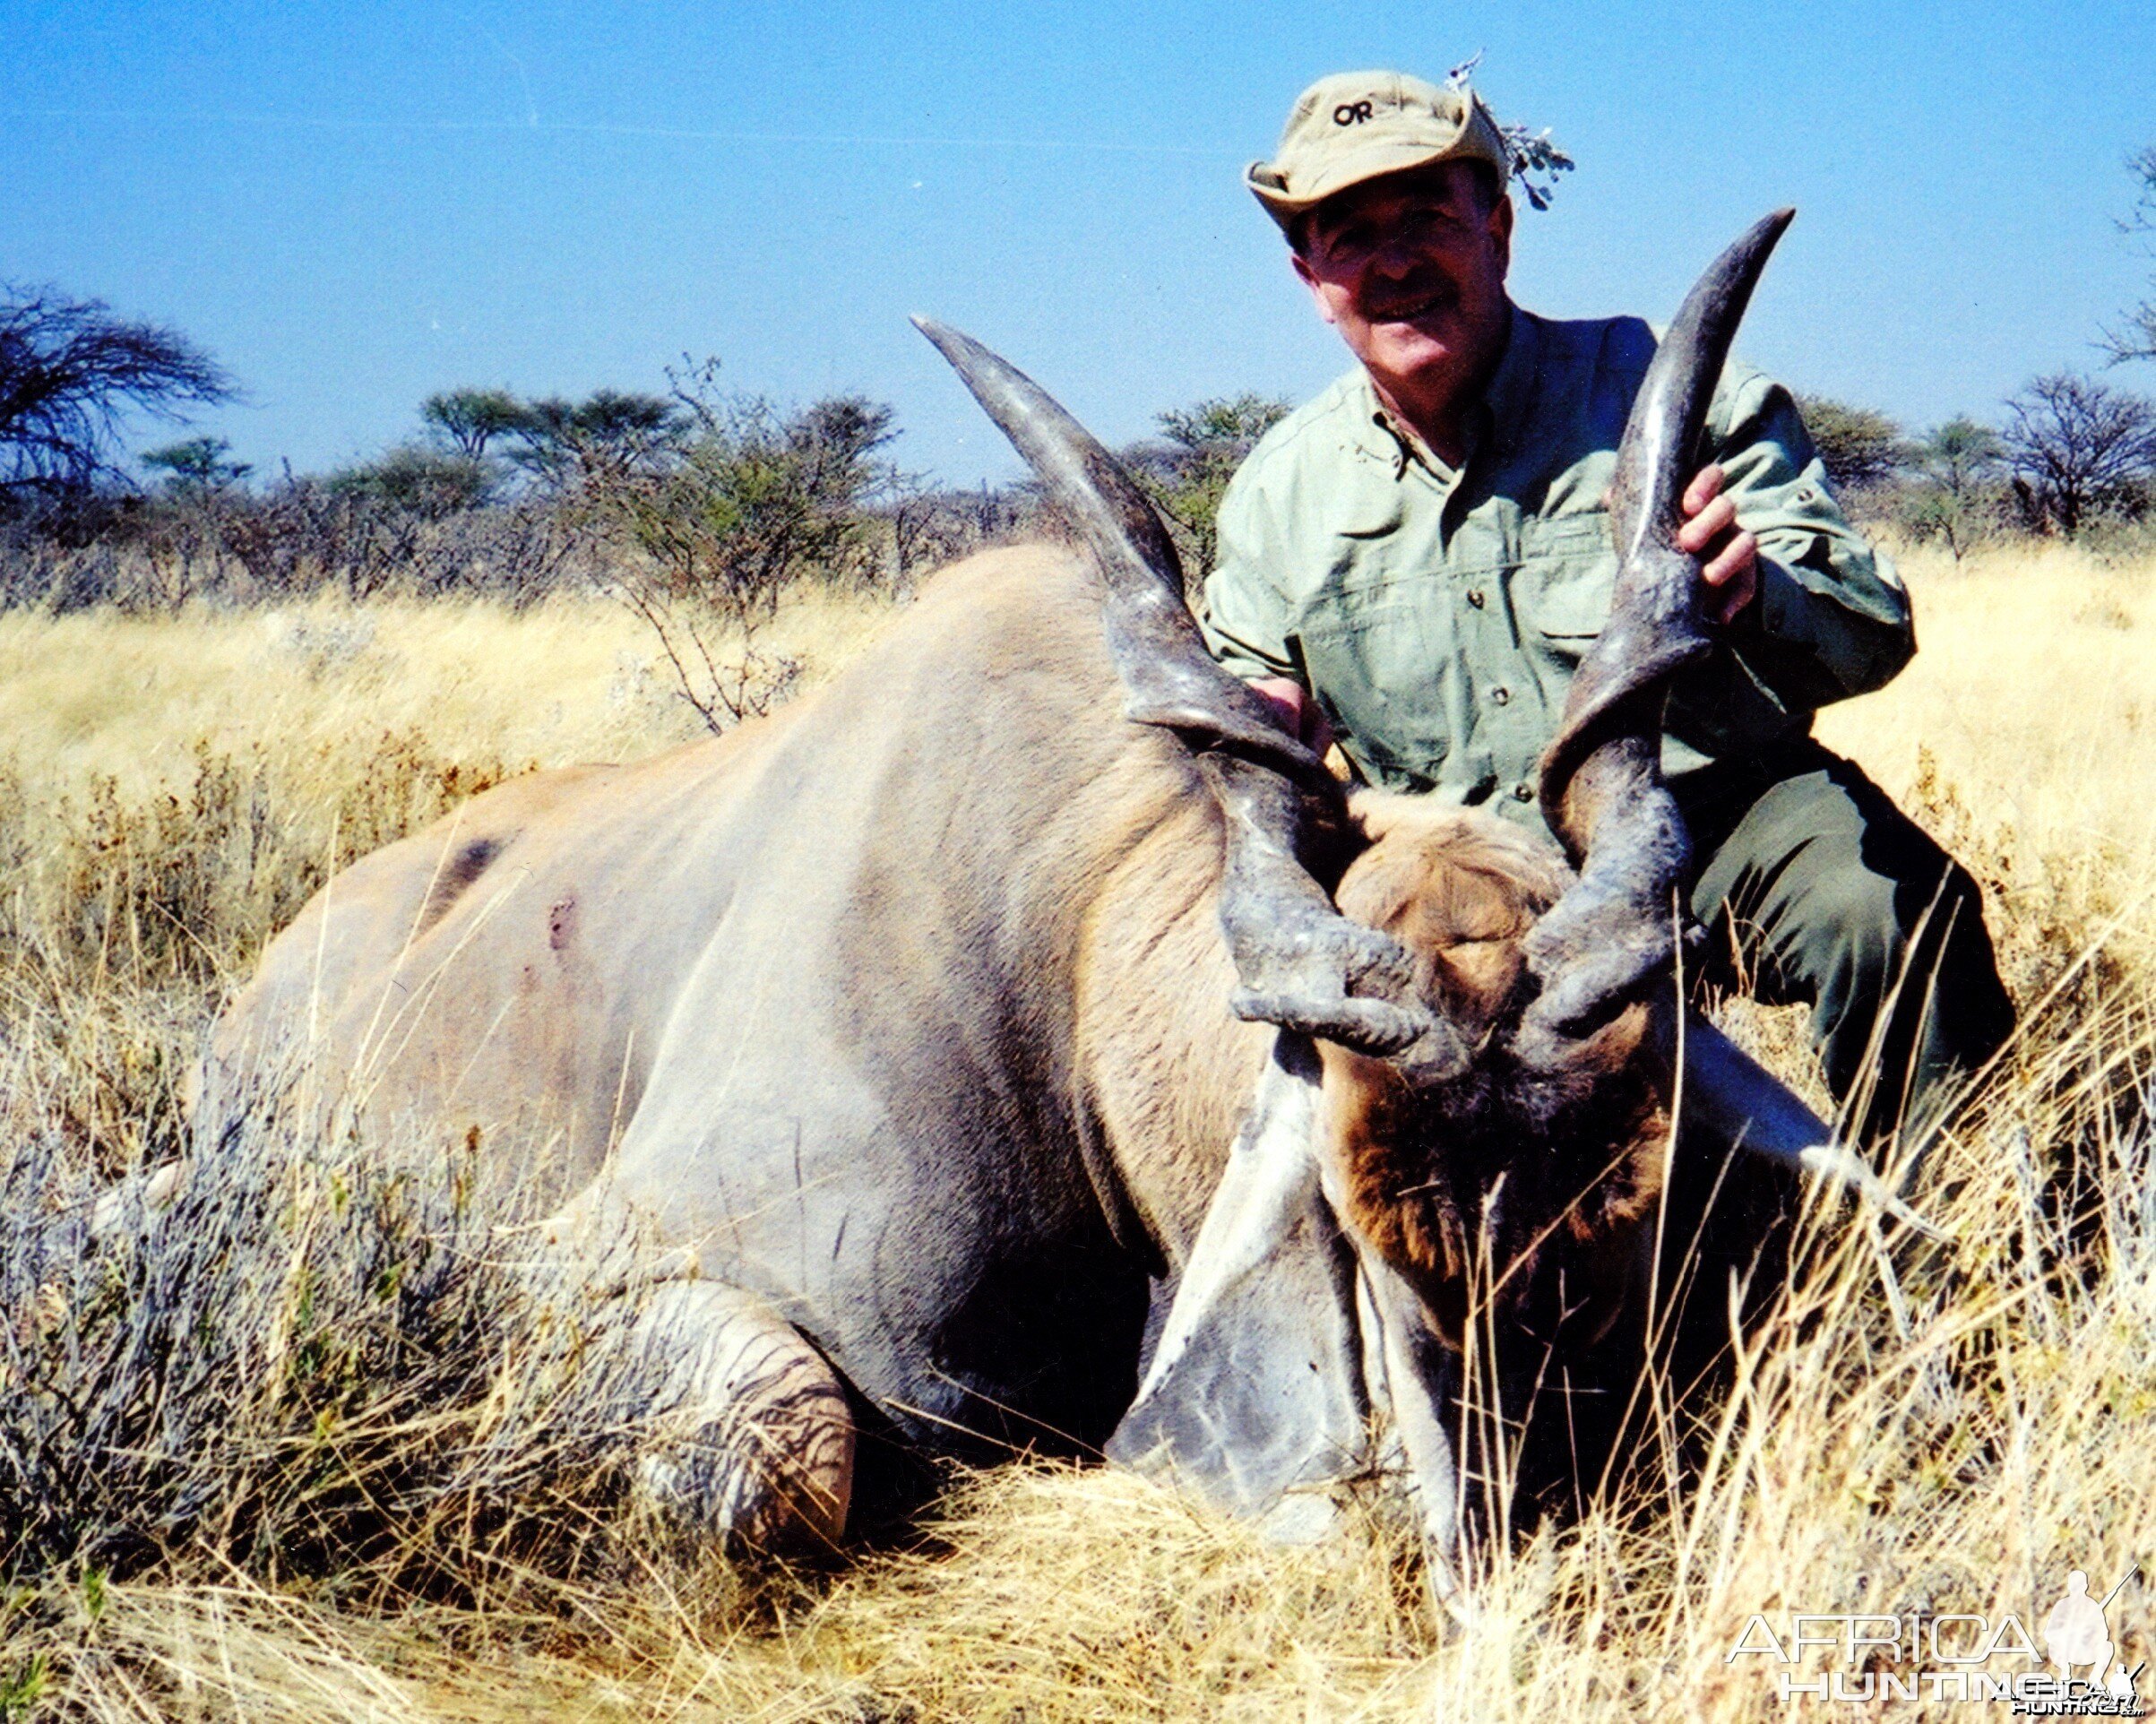 46 " Cape Eland taken in Namibia 2000